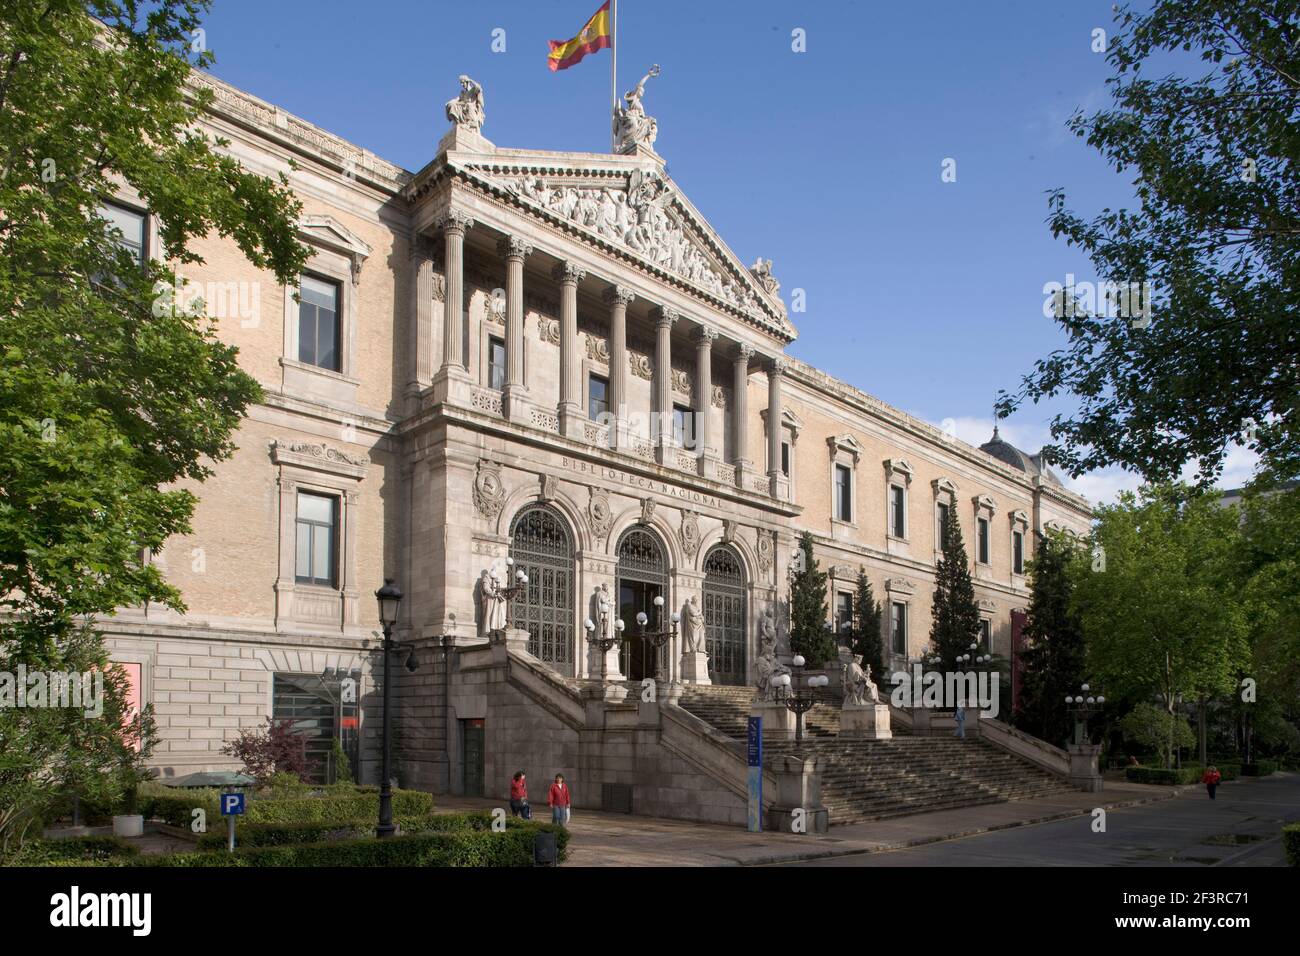 Fachada de la Biblioteca Nacional, Madrid, España. Foto de stock